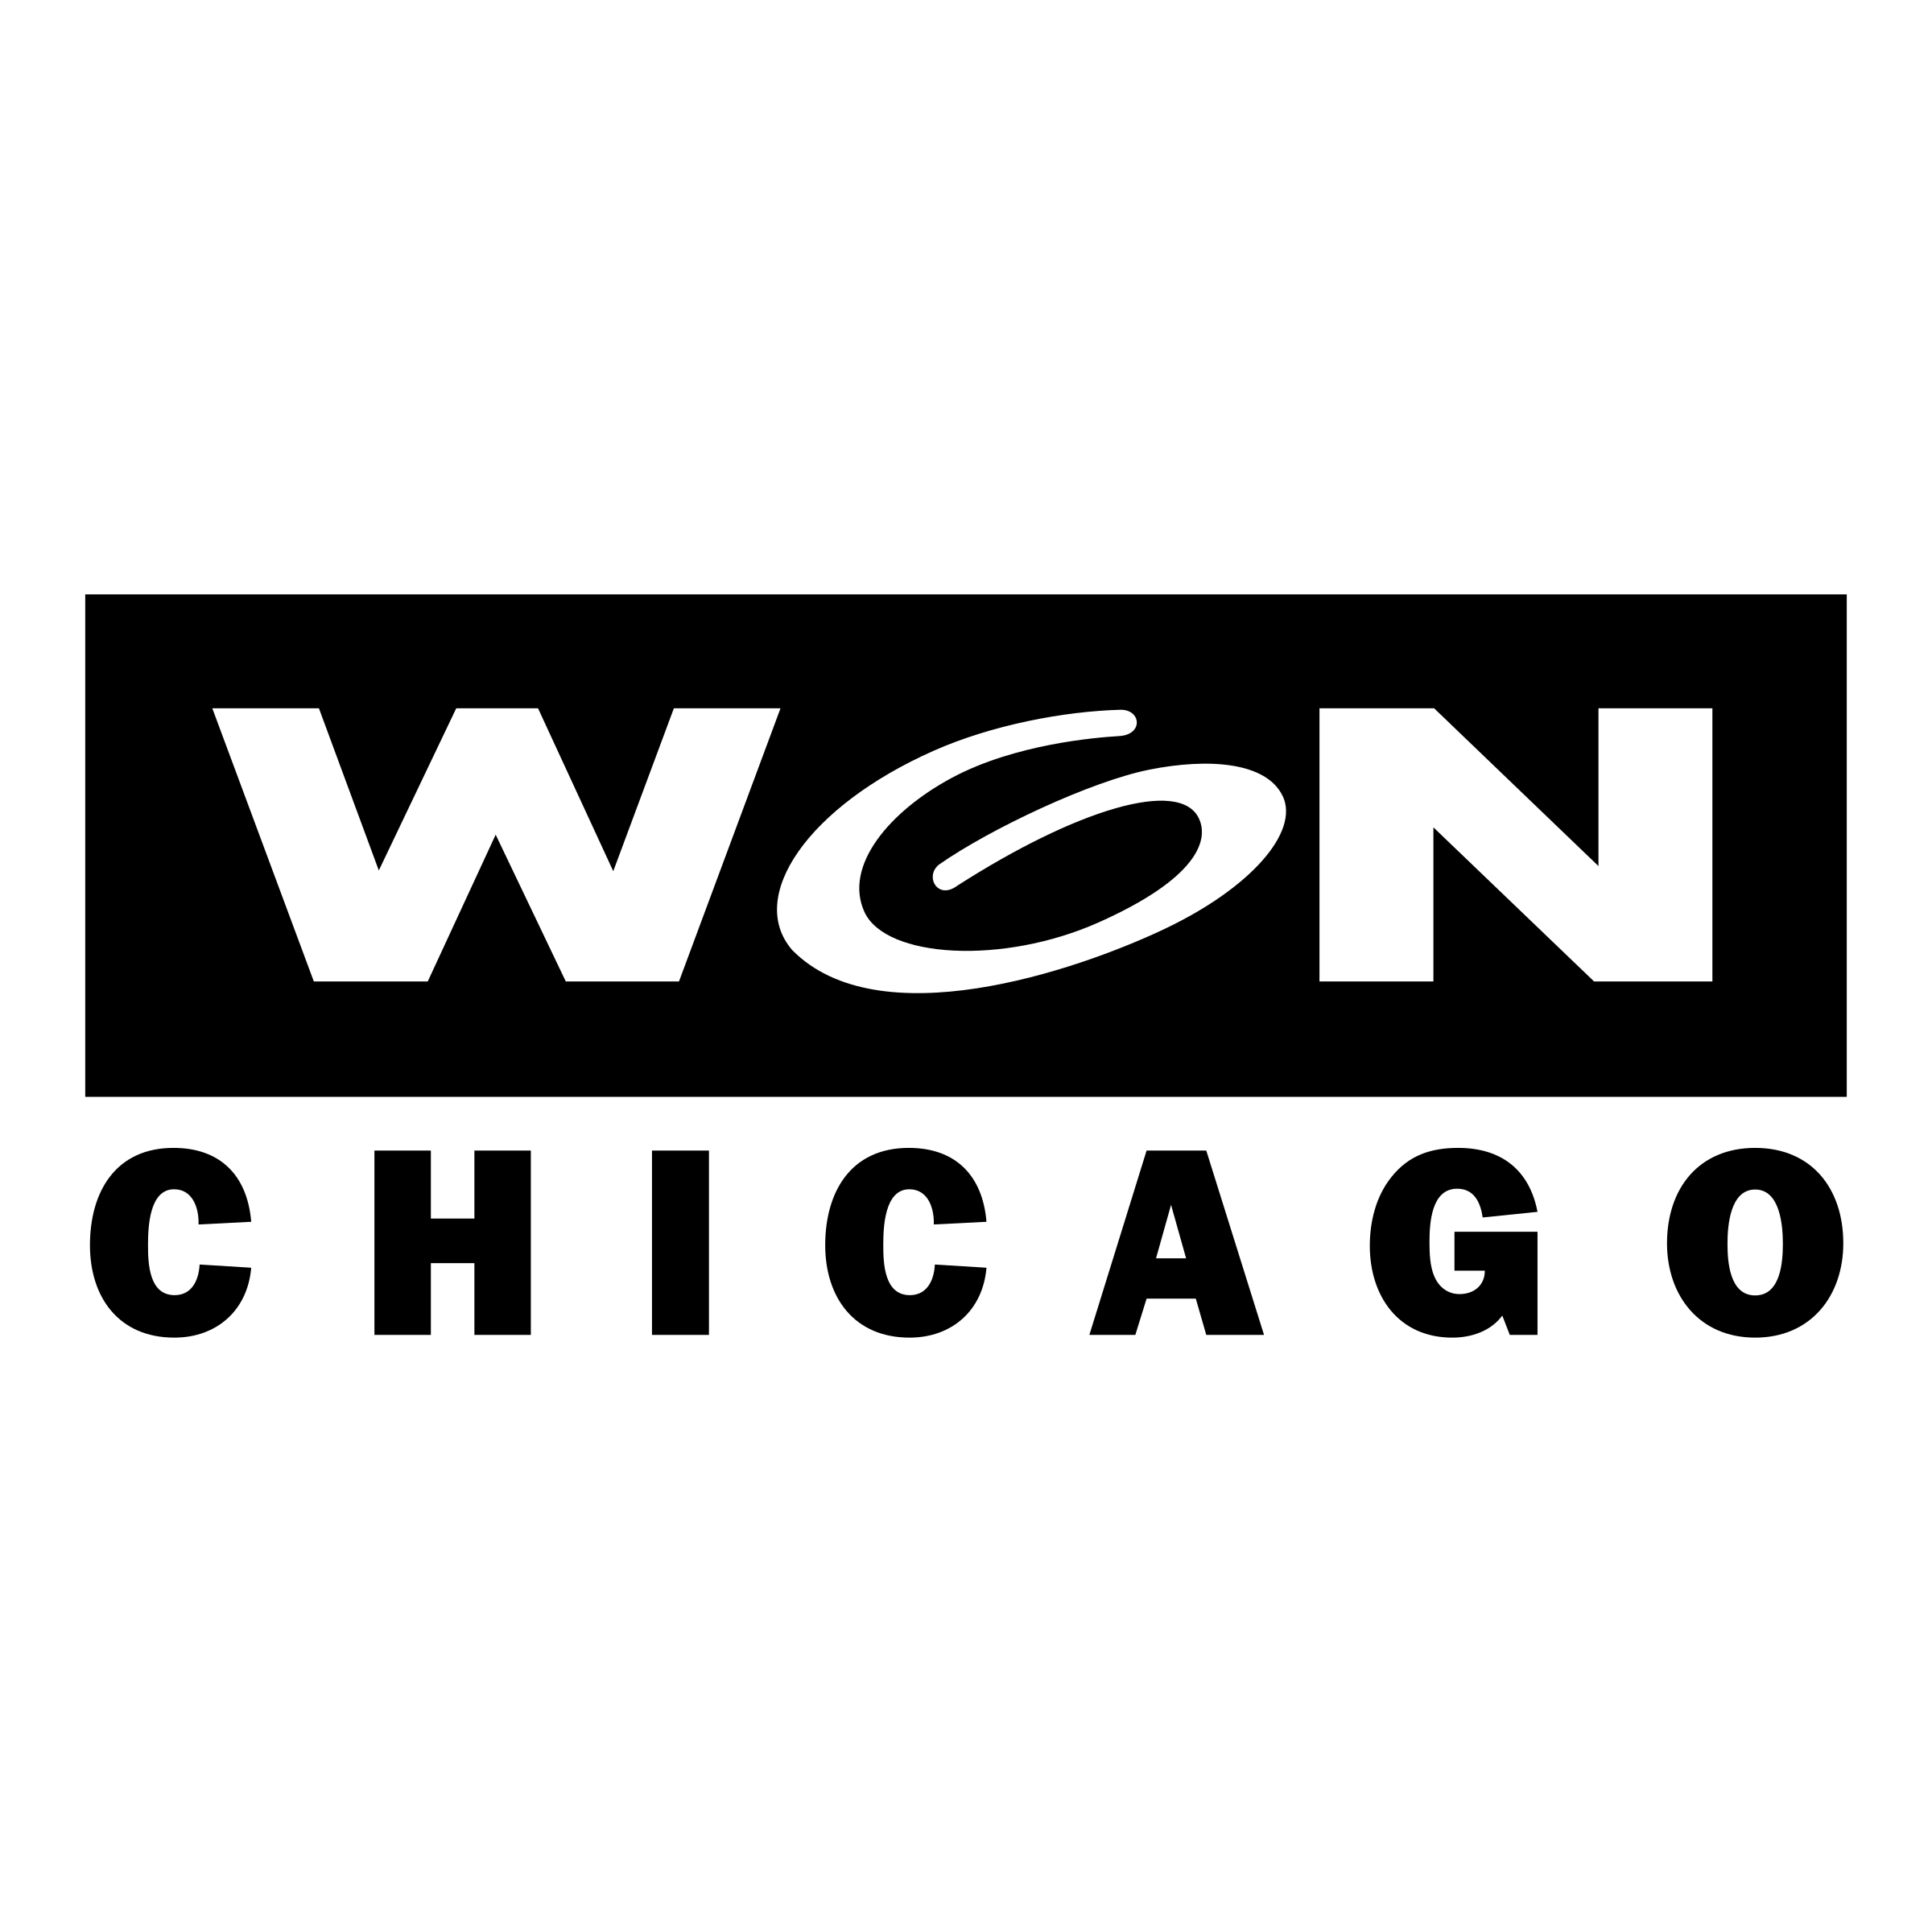 WGN Logo - WGN Chicago Logo PNG Transparent & SVG Vector - Freebie Supply